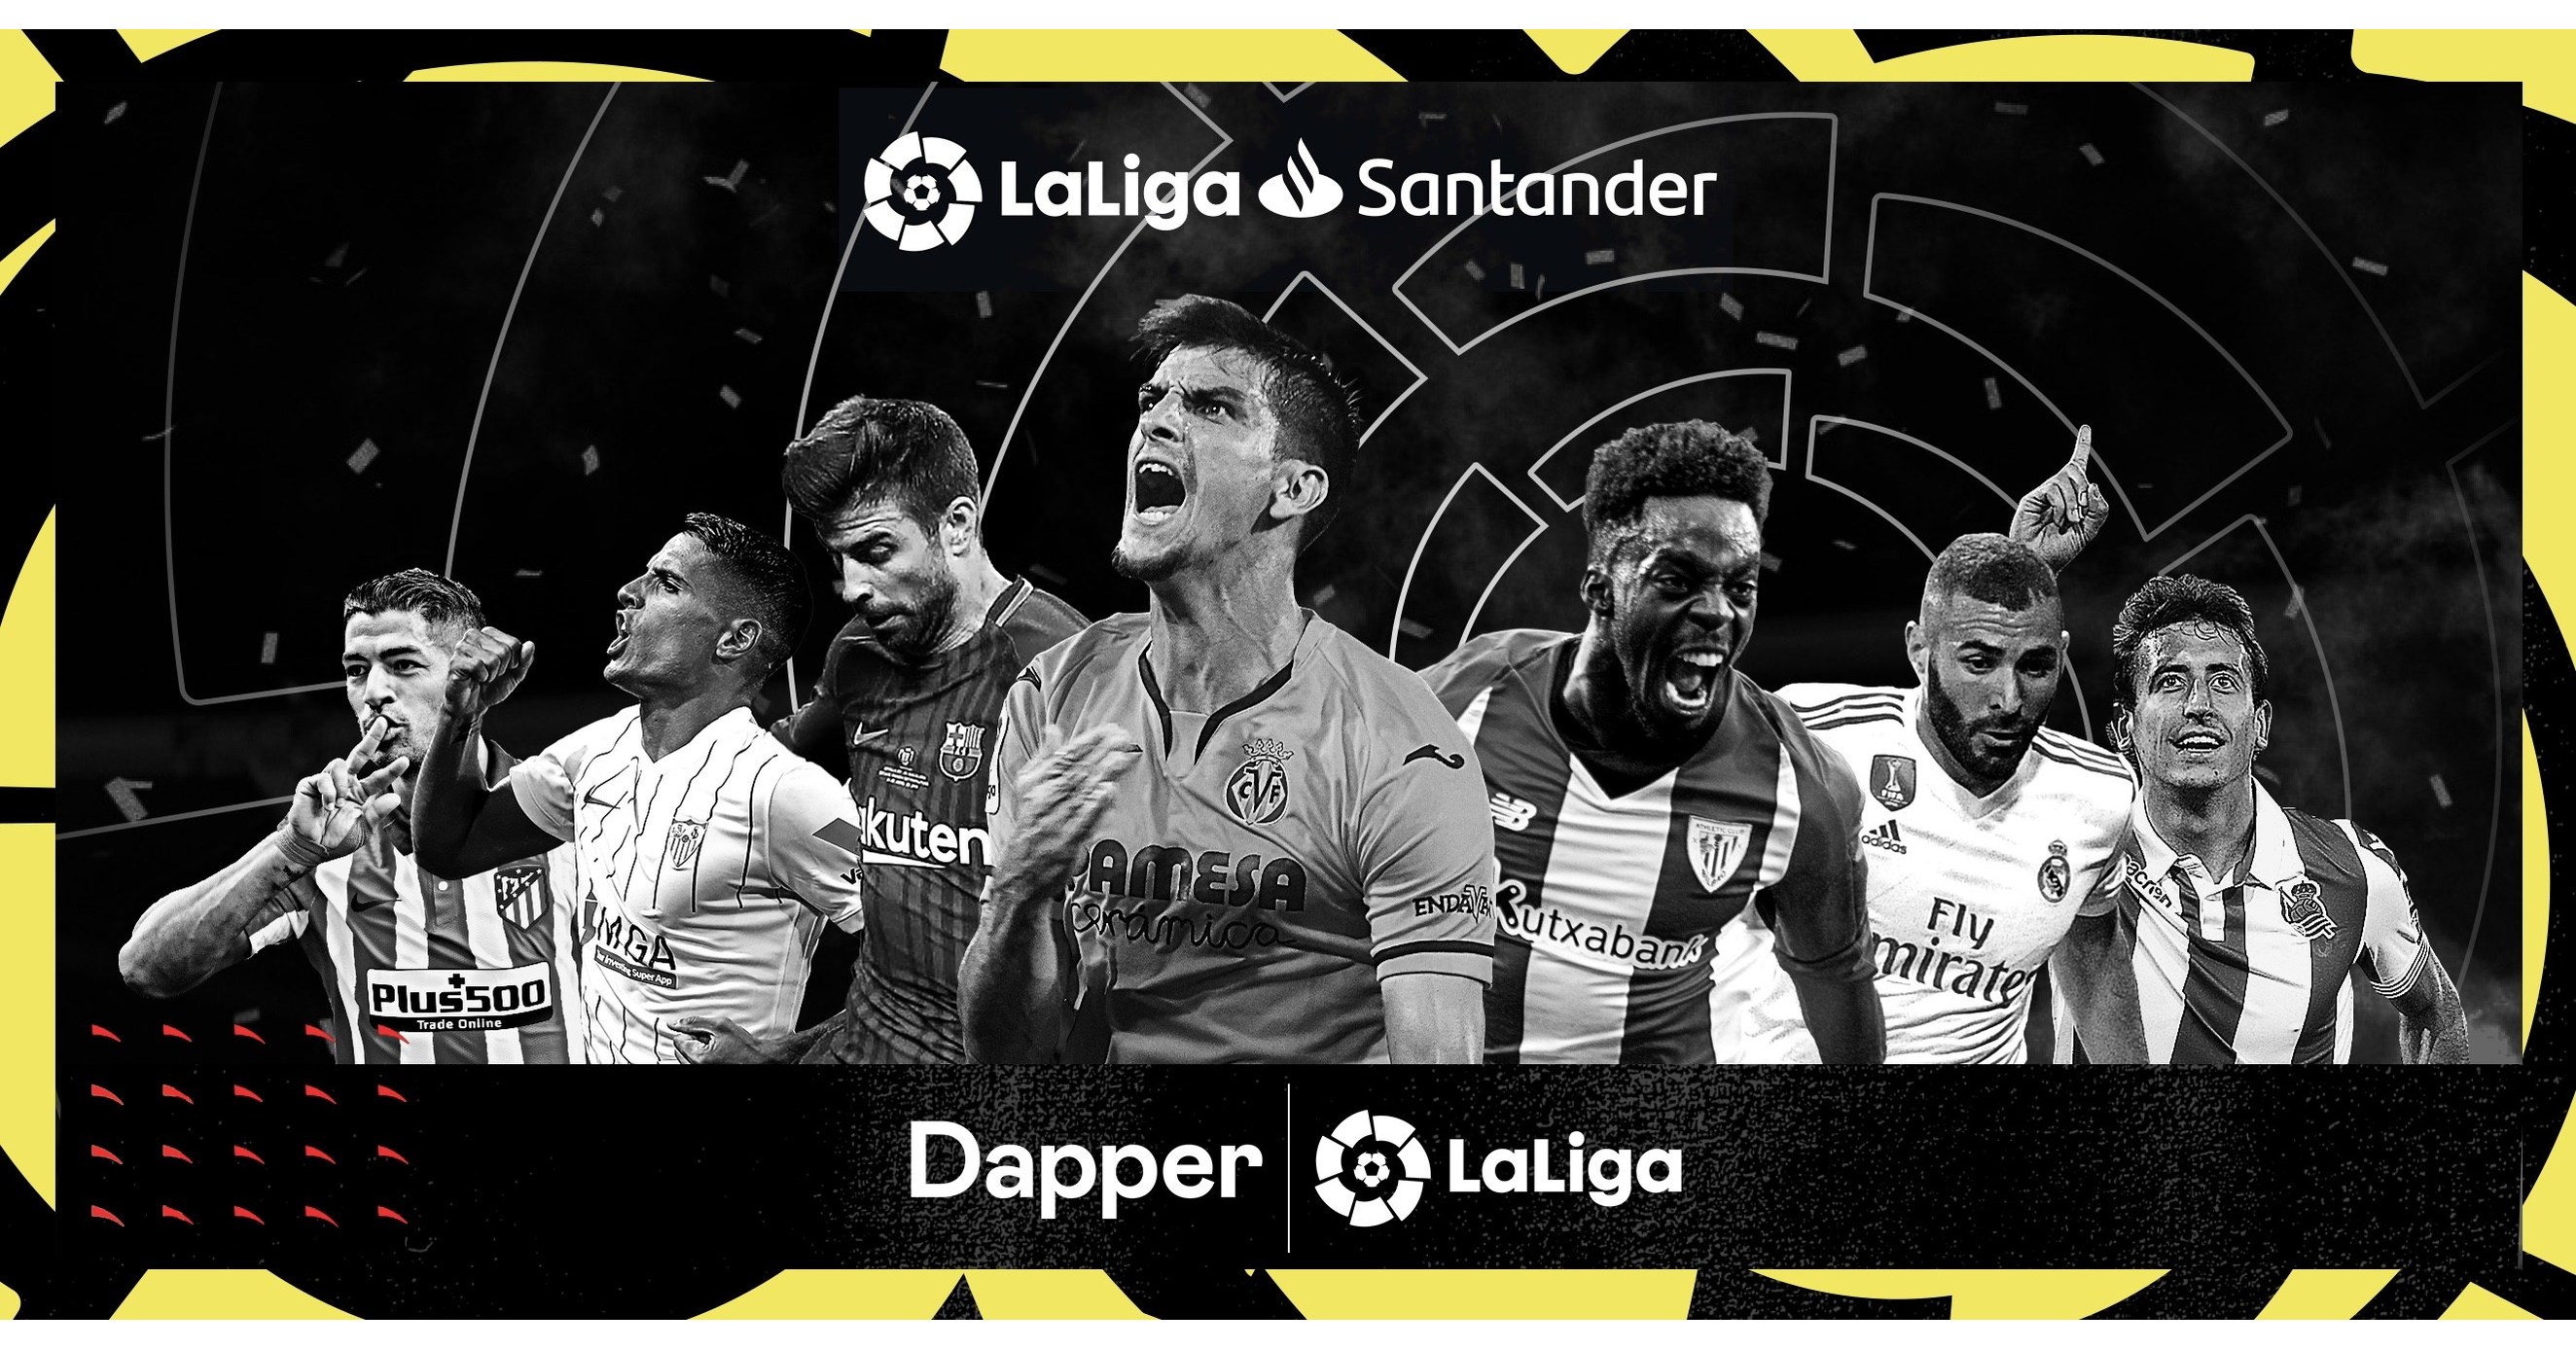 LaLiga - My favourite team from LaLiga Santander is